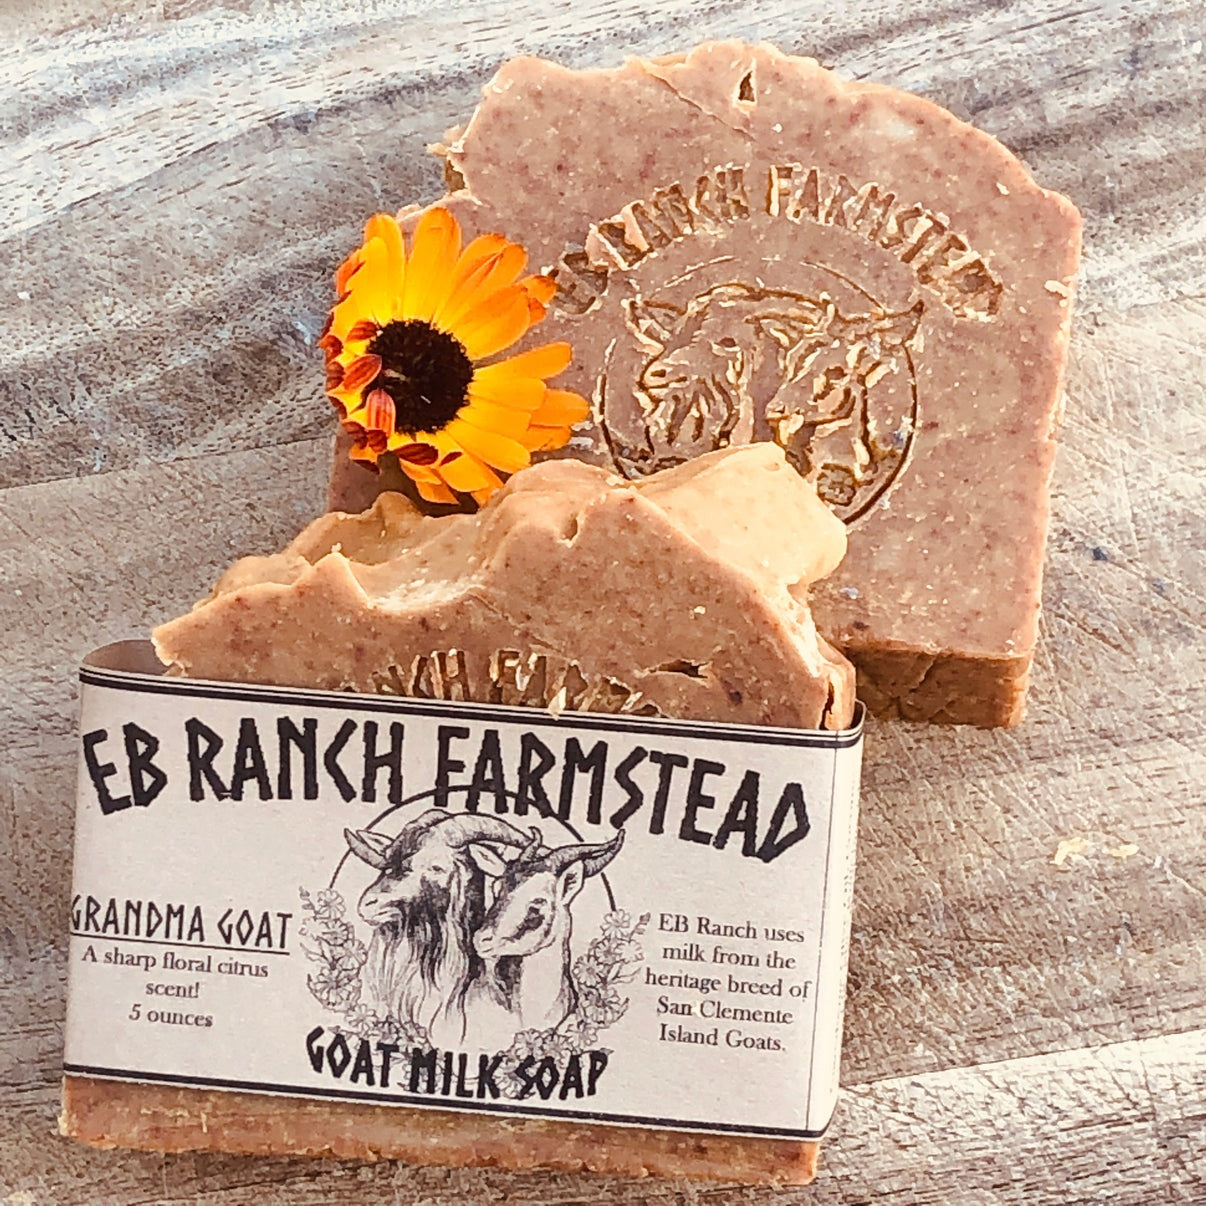 Bar of Wild Haven Farm's Grandma Goat goat milk soap made with San Clemente Island goat milk